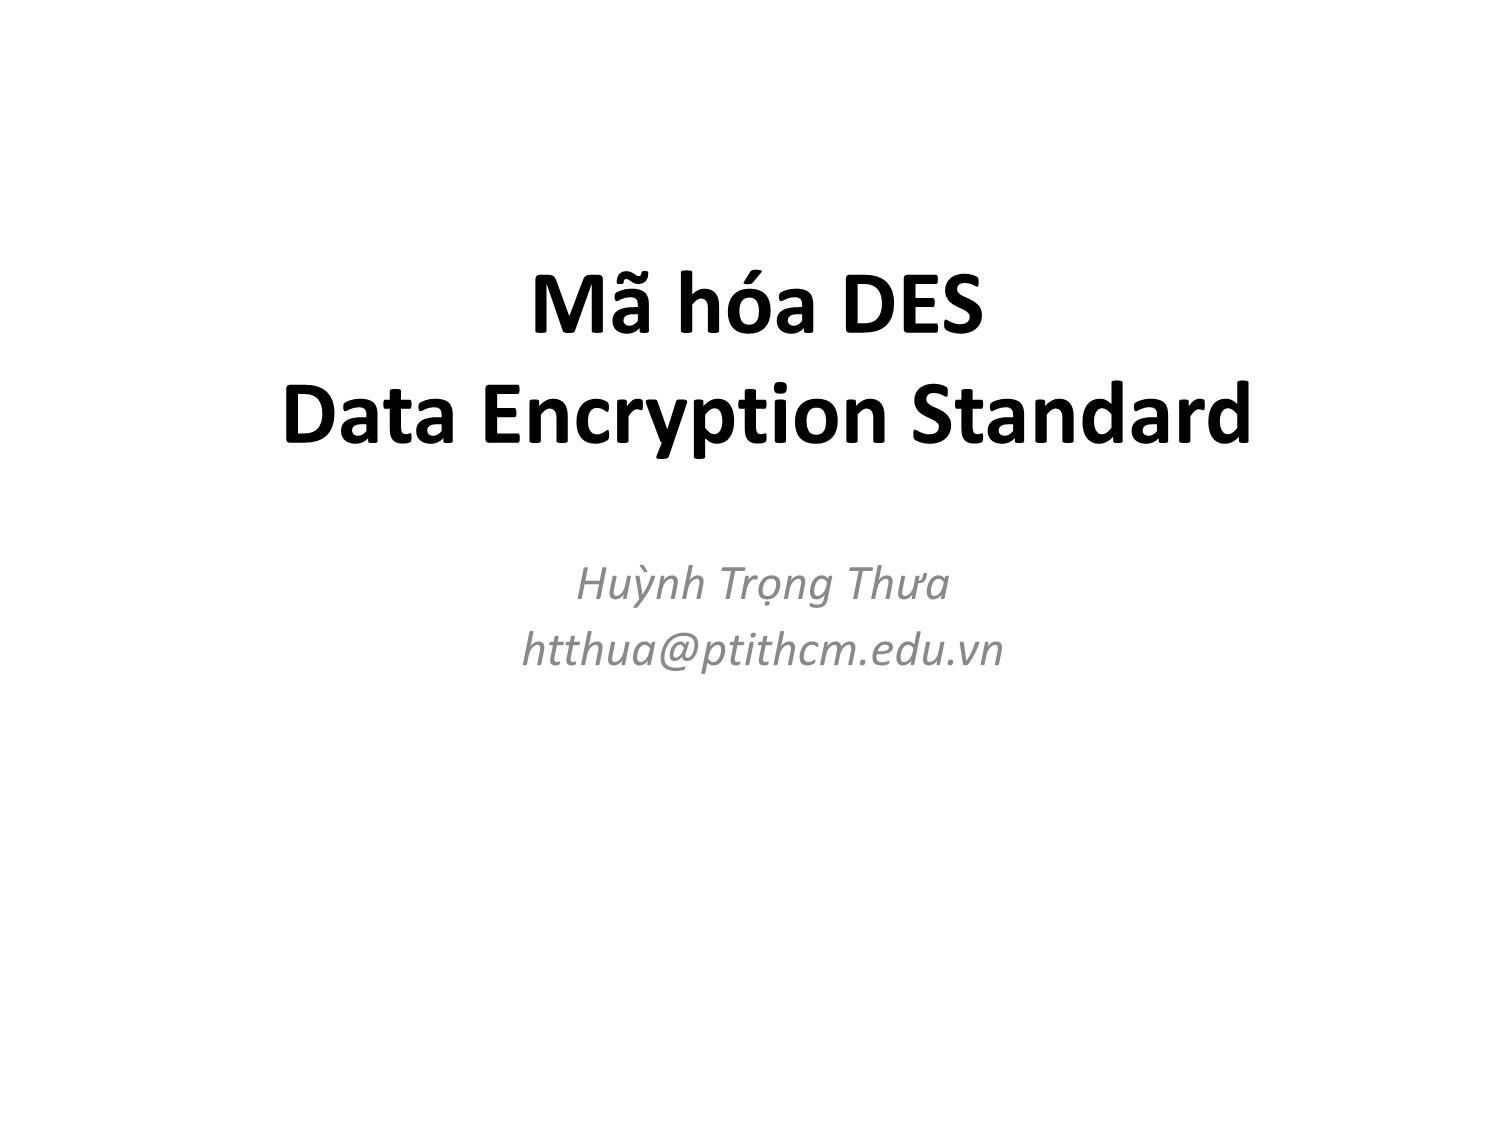 Mã hóa des data encryption standard trang 1